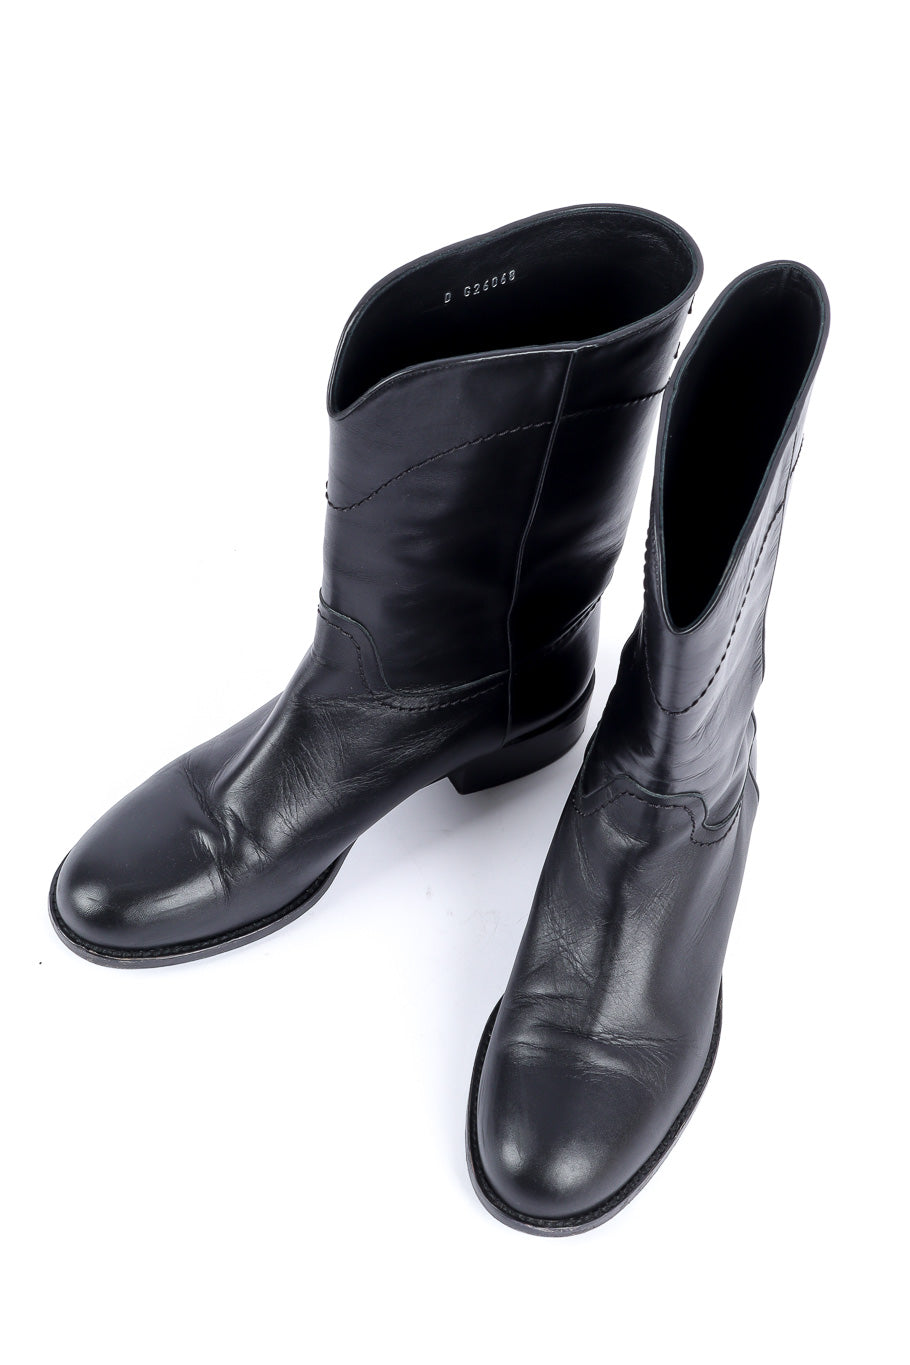 Chanel interlocking CC mid-calf boots product shot @recessla